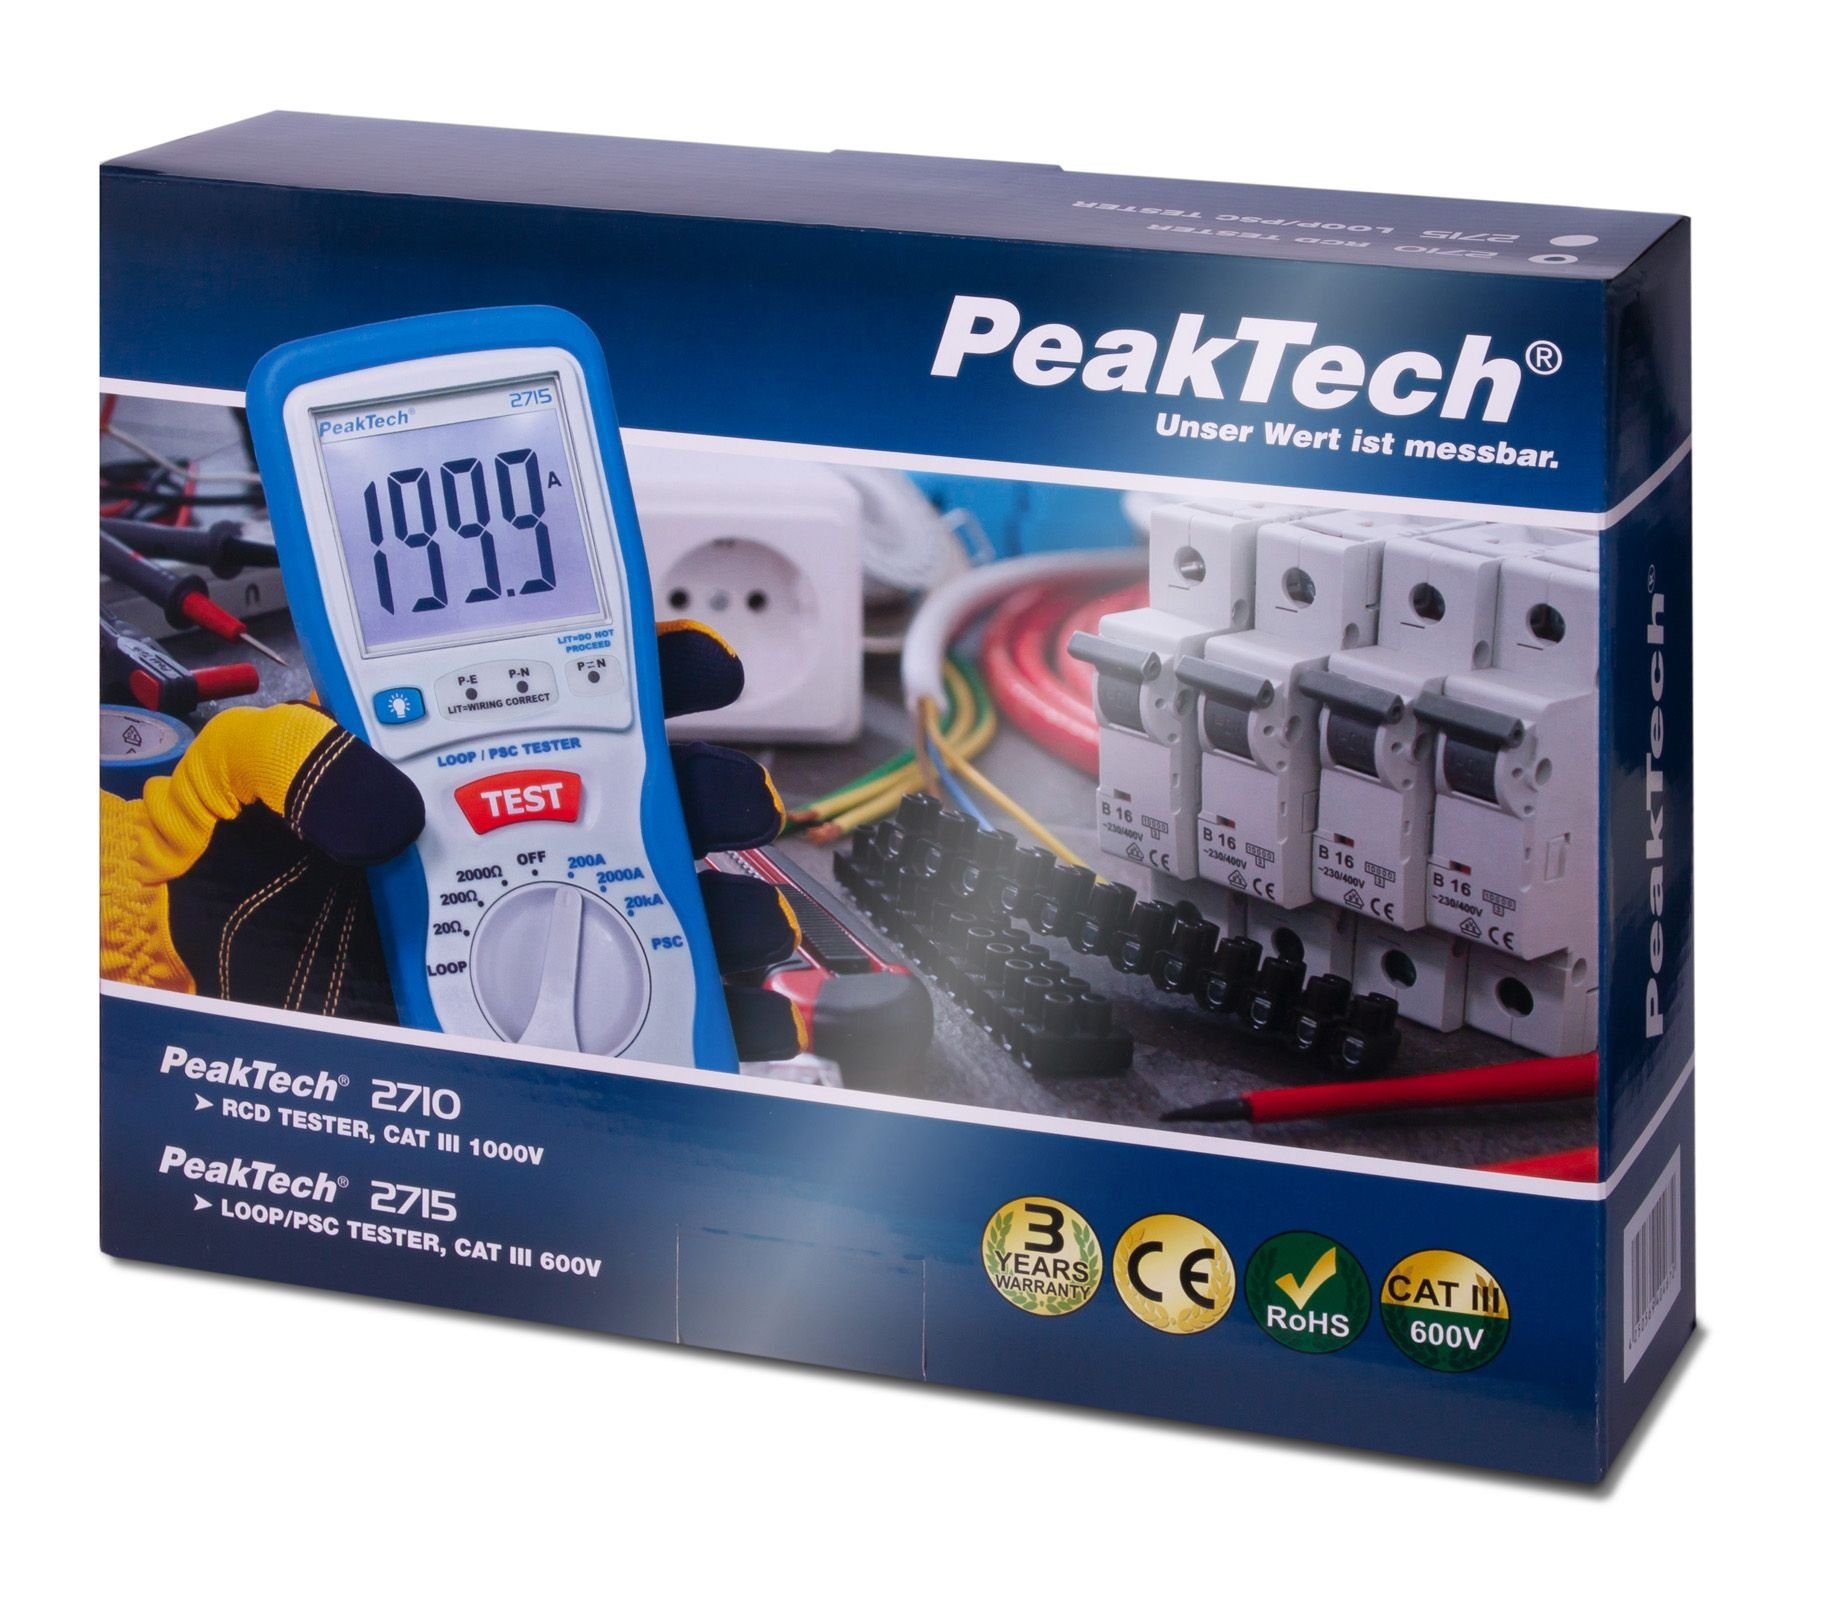 (1 P 2710: Auslösecharakteristik, Digitaler Tester PeakTech für PeakTech Spannungsprüfer FI St)